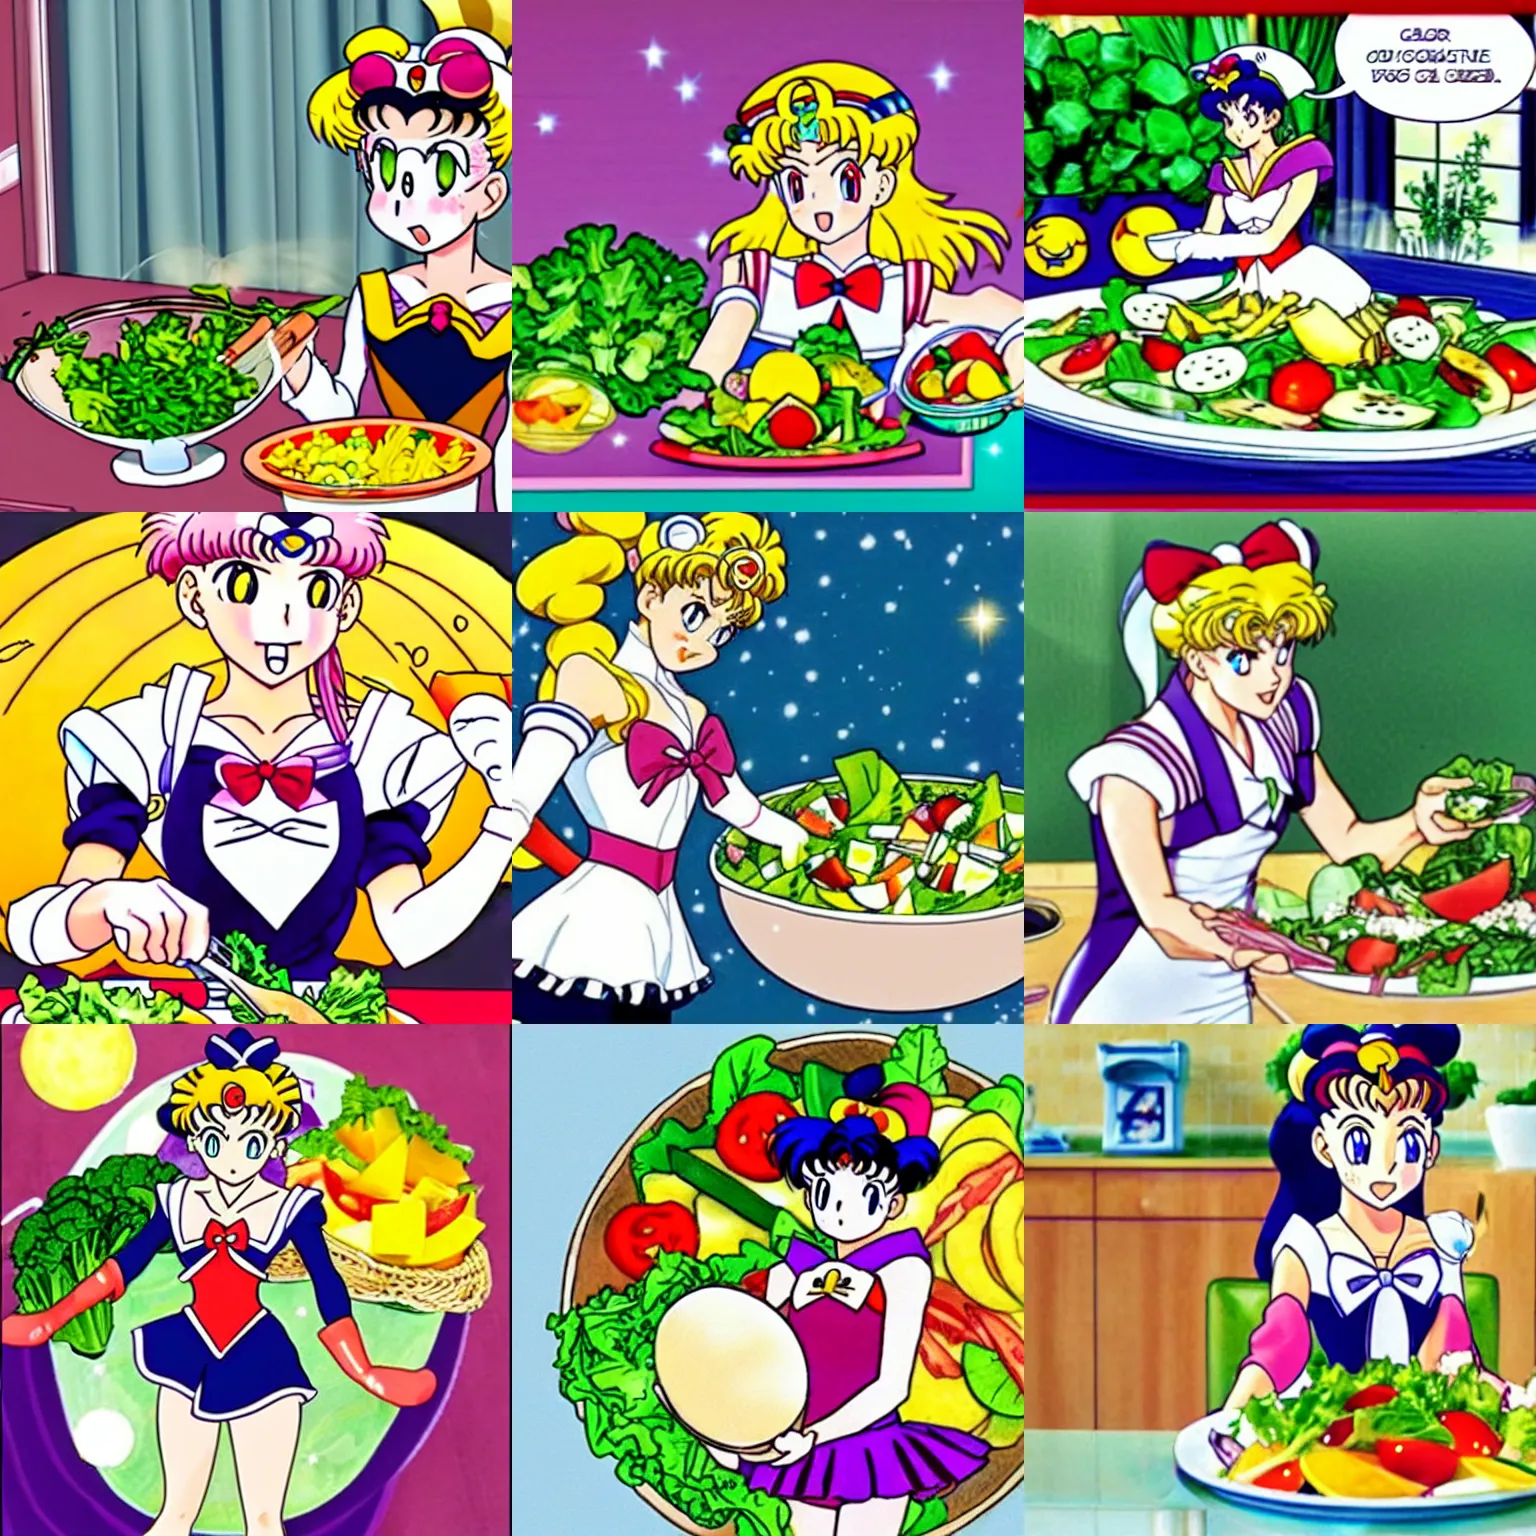 Prompt: Sailor Moon making a salad.